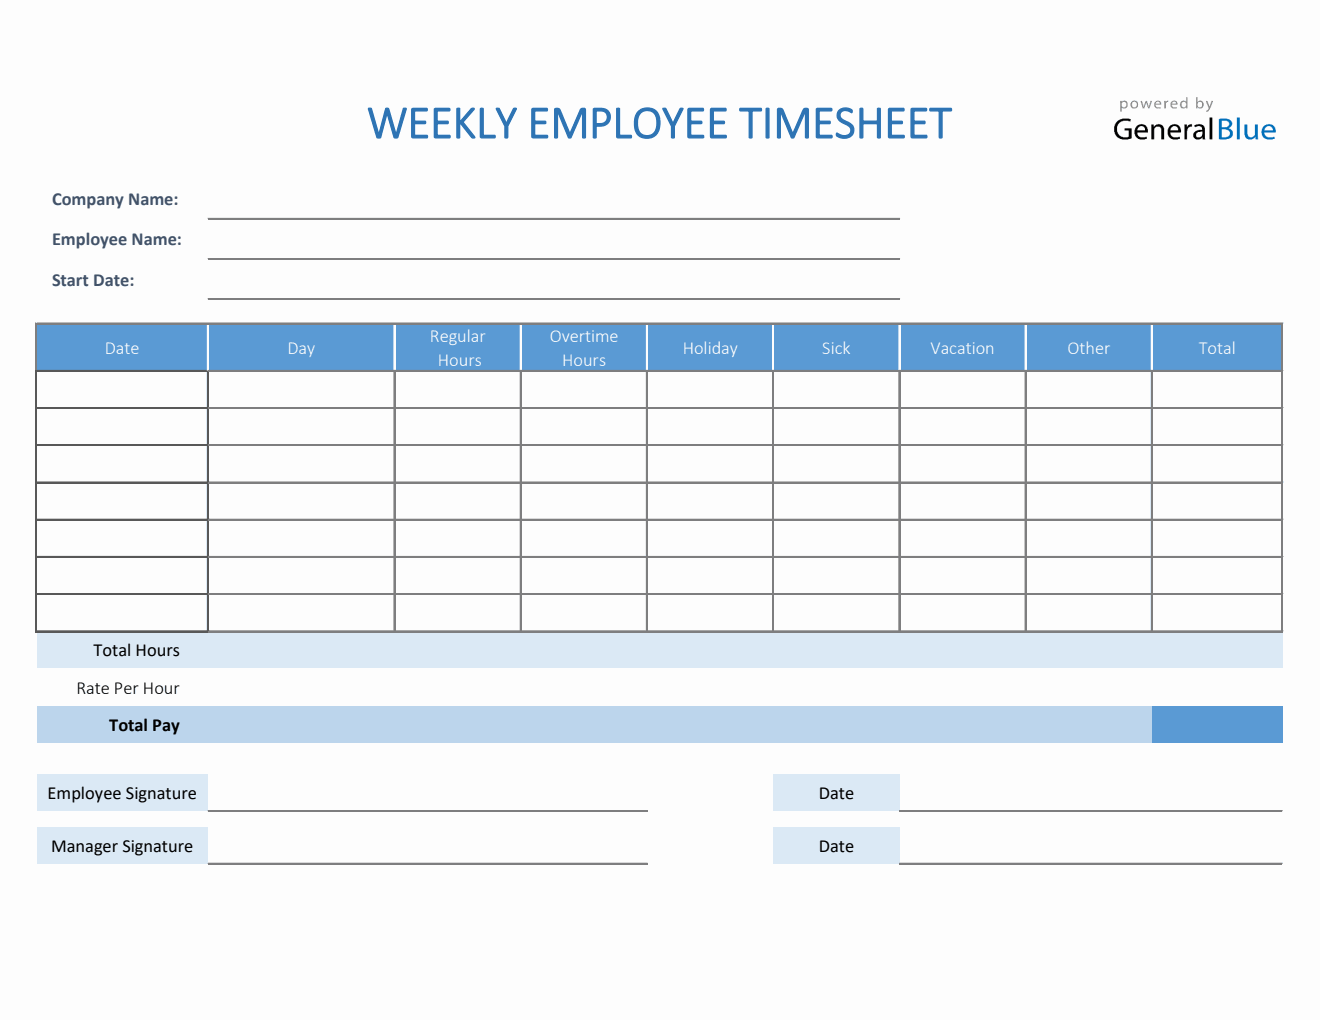 Weekly Employee Timesheet in Excel